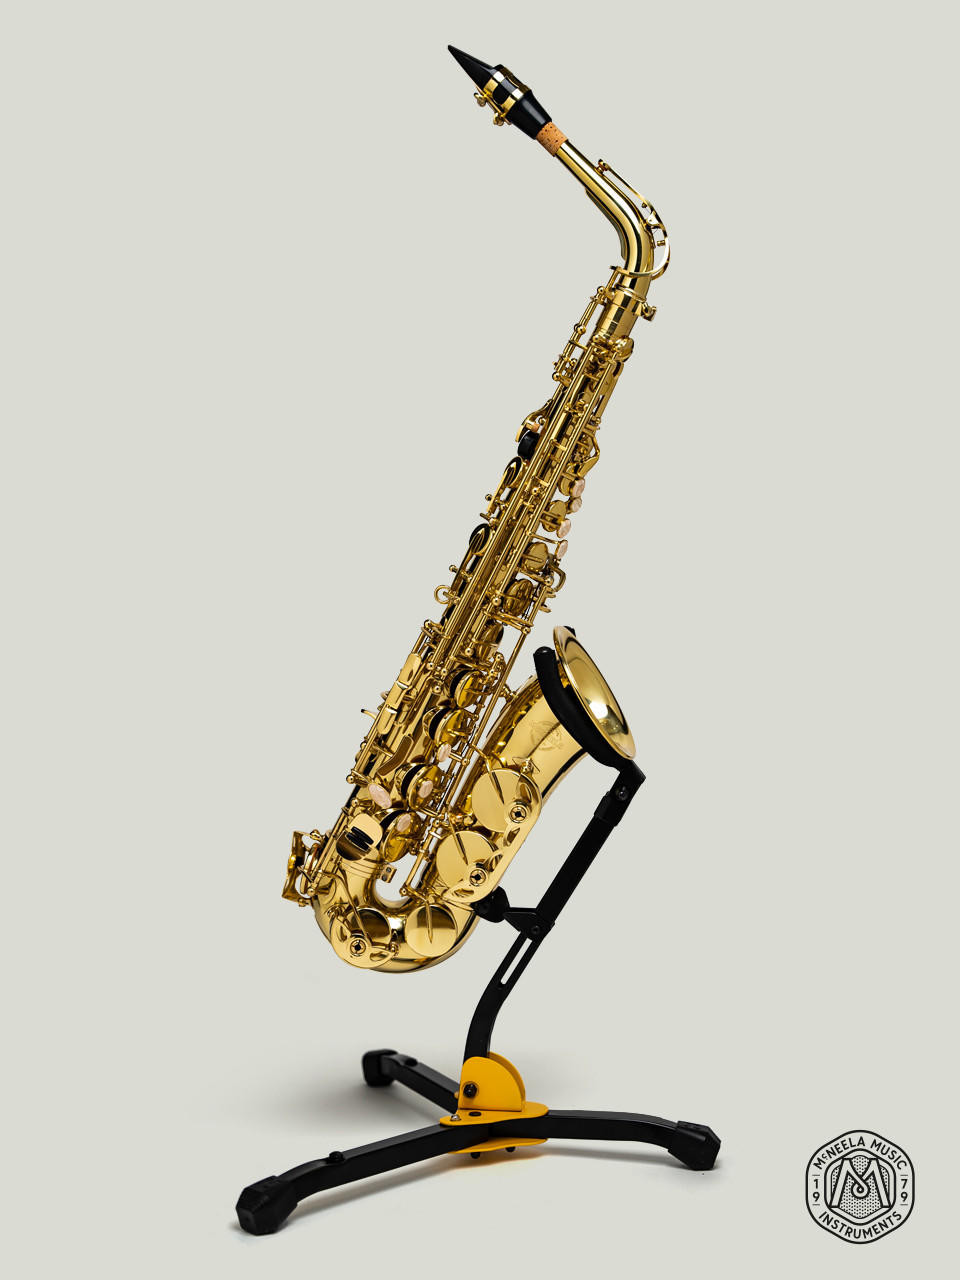  Rhythm Eb Alto Saxophone With Carrying Sax Case,Full